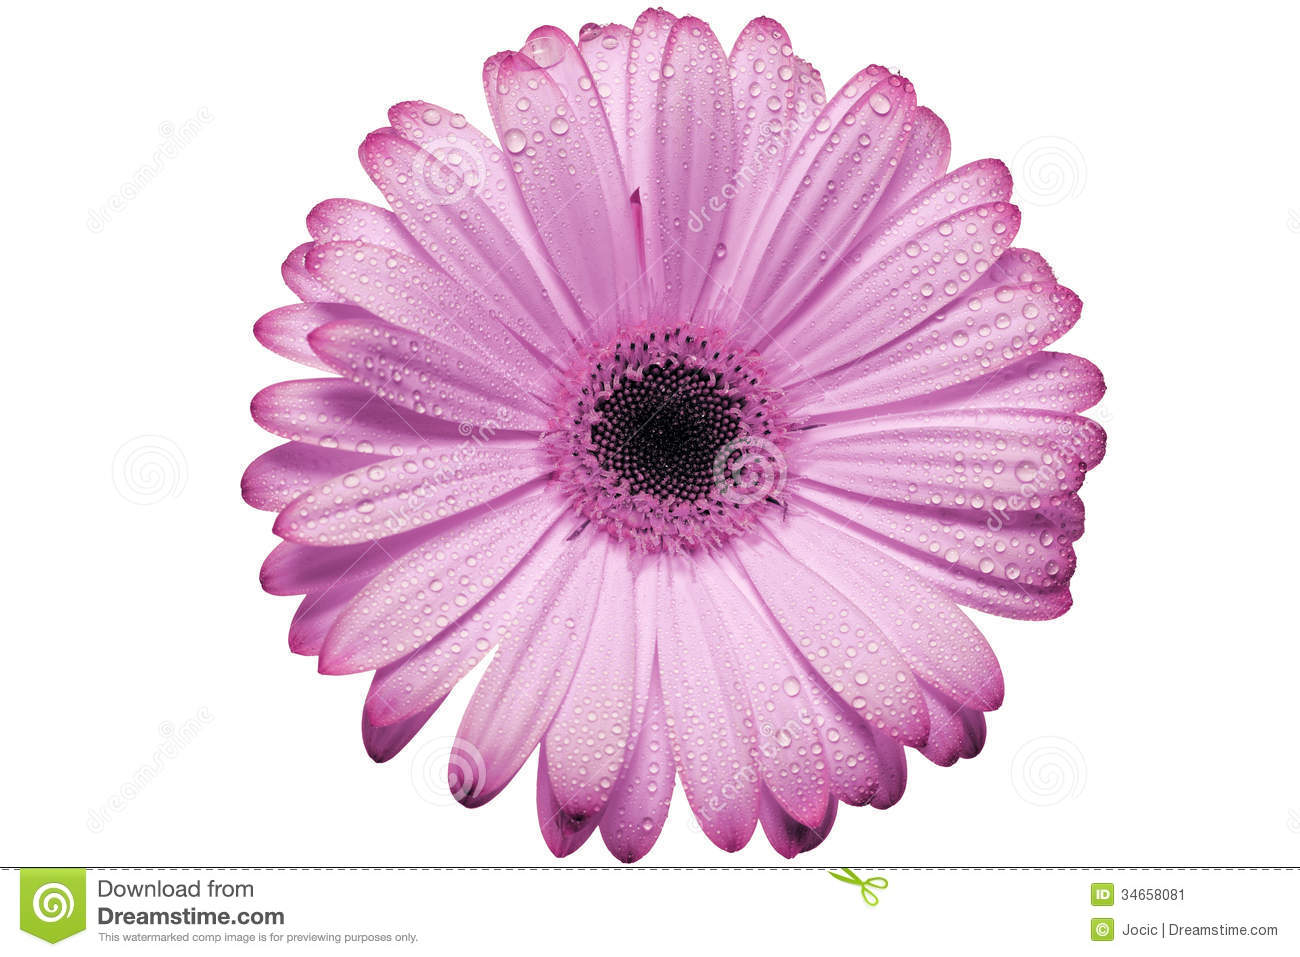 Pink Gerbera Daisy Blossom Stock Image   Image  34658081